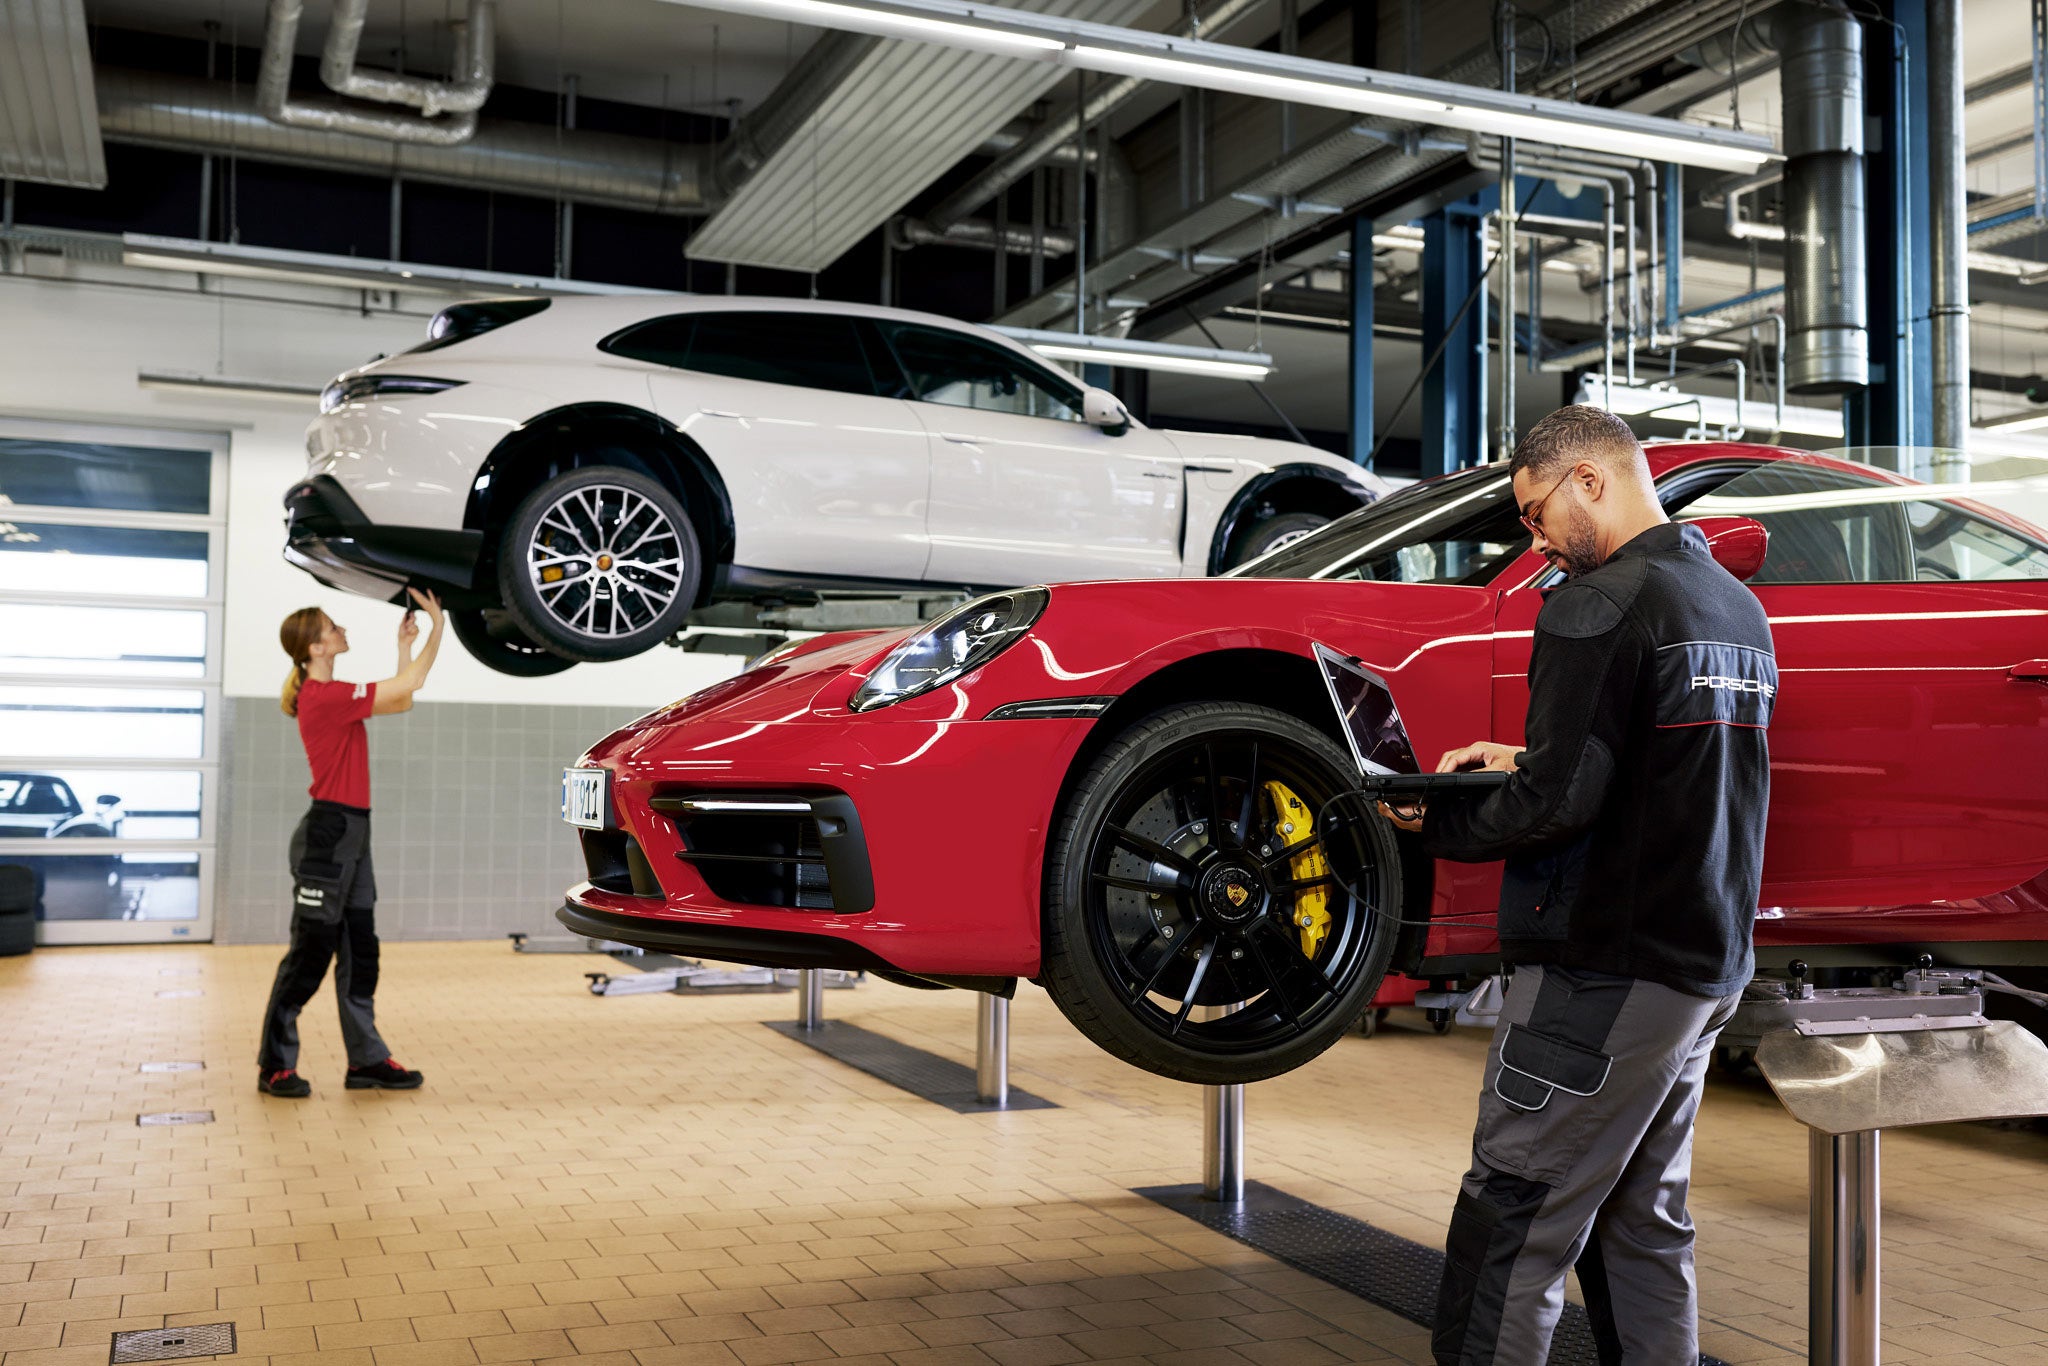 Porsche Certified Service Technicians performing evaluation on a white Porsche Macan and a red Porsche 911